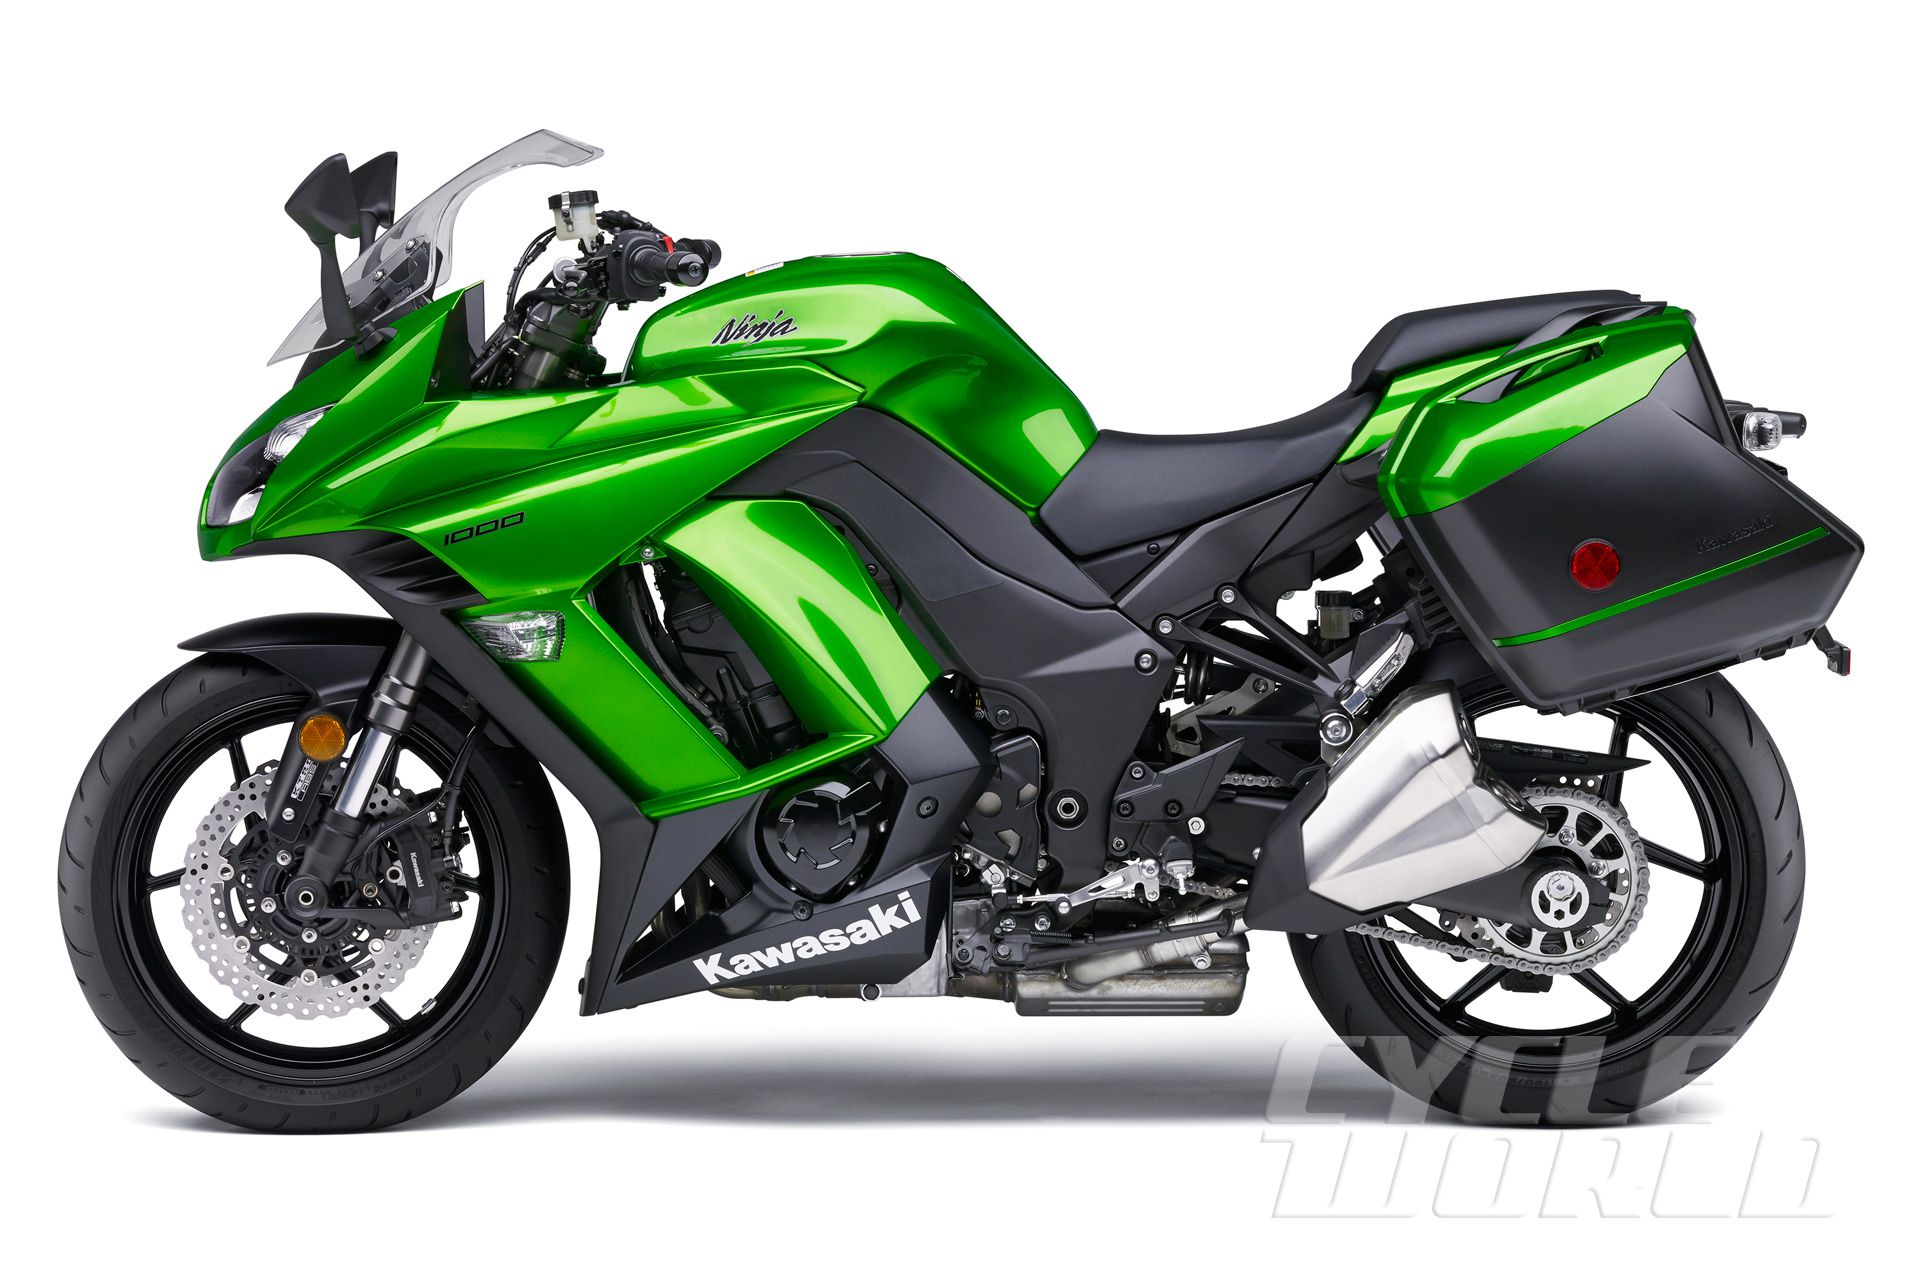 2014 Kawasaki Ninja 1000 ABS- First Look Photos- Pricing Cycle World